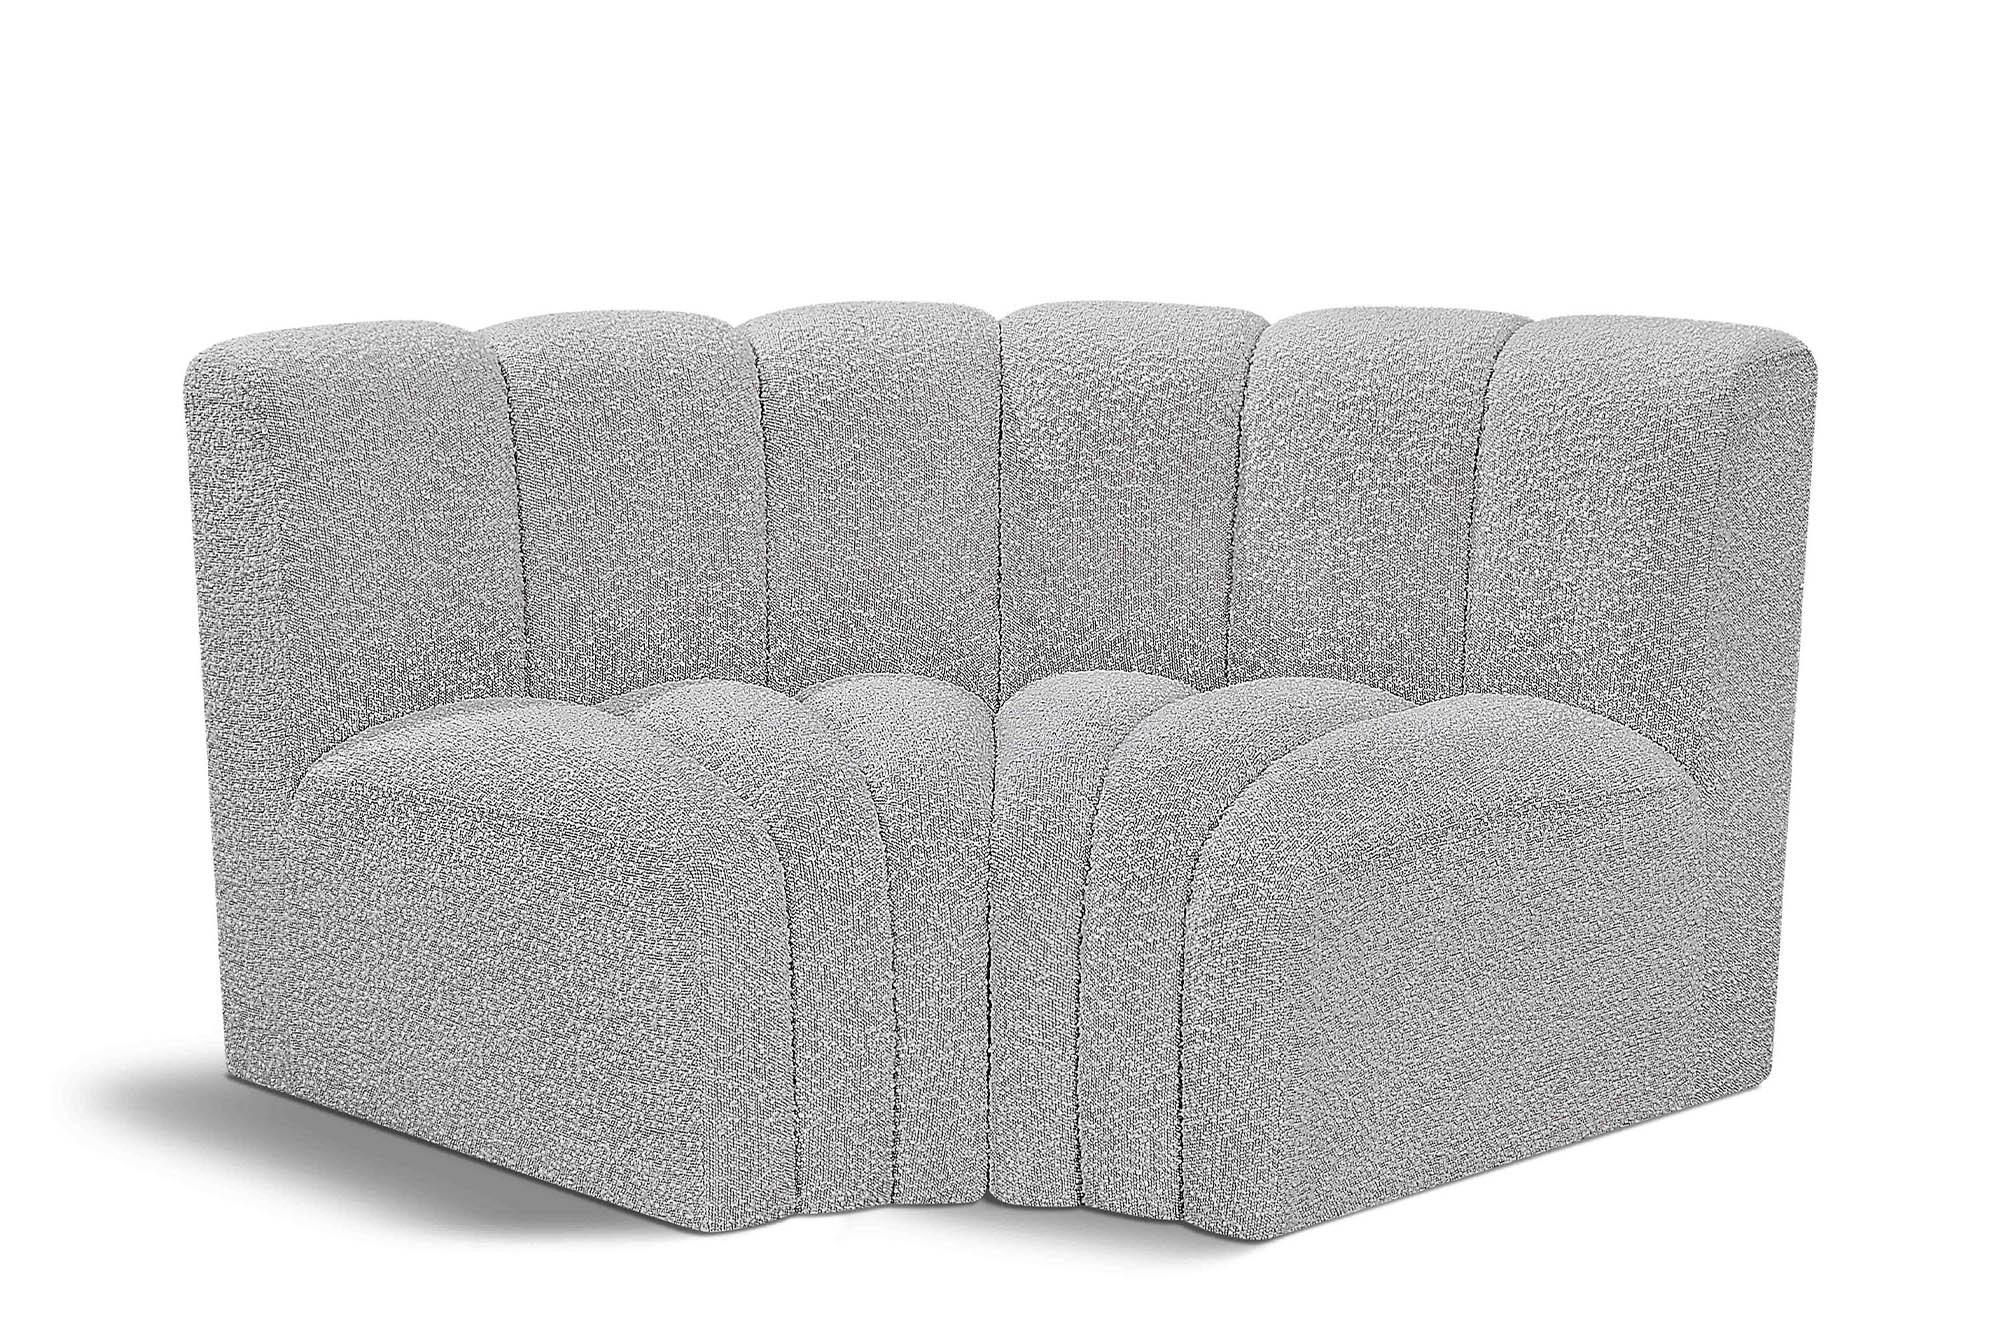 Contemporary, Modern Modular Sectional Sofa ARC 102Grey-S2B 102Grey-S2B in Gray 